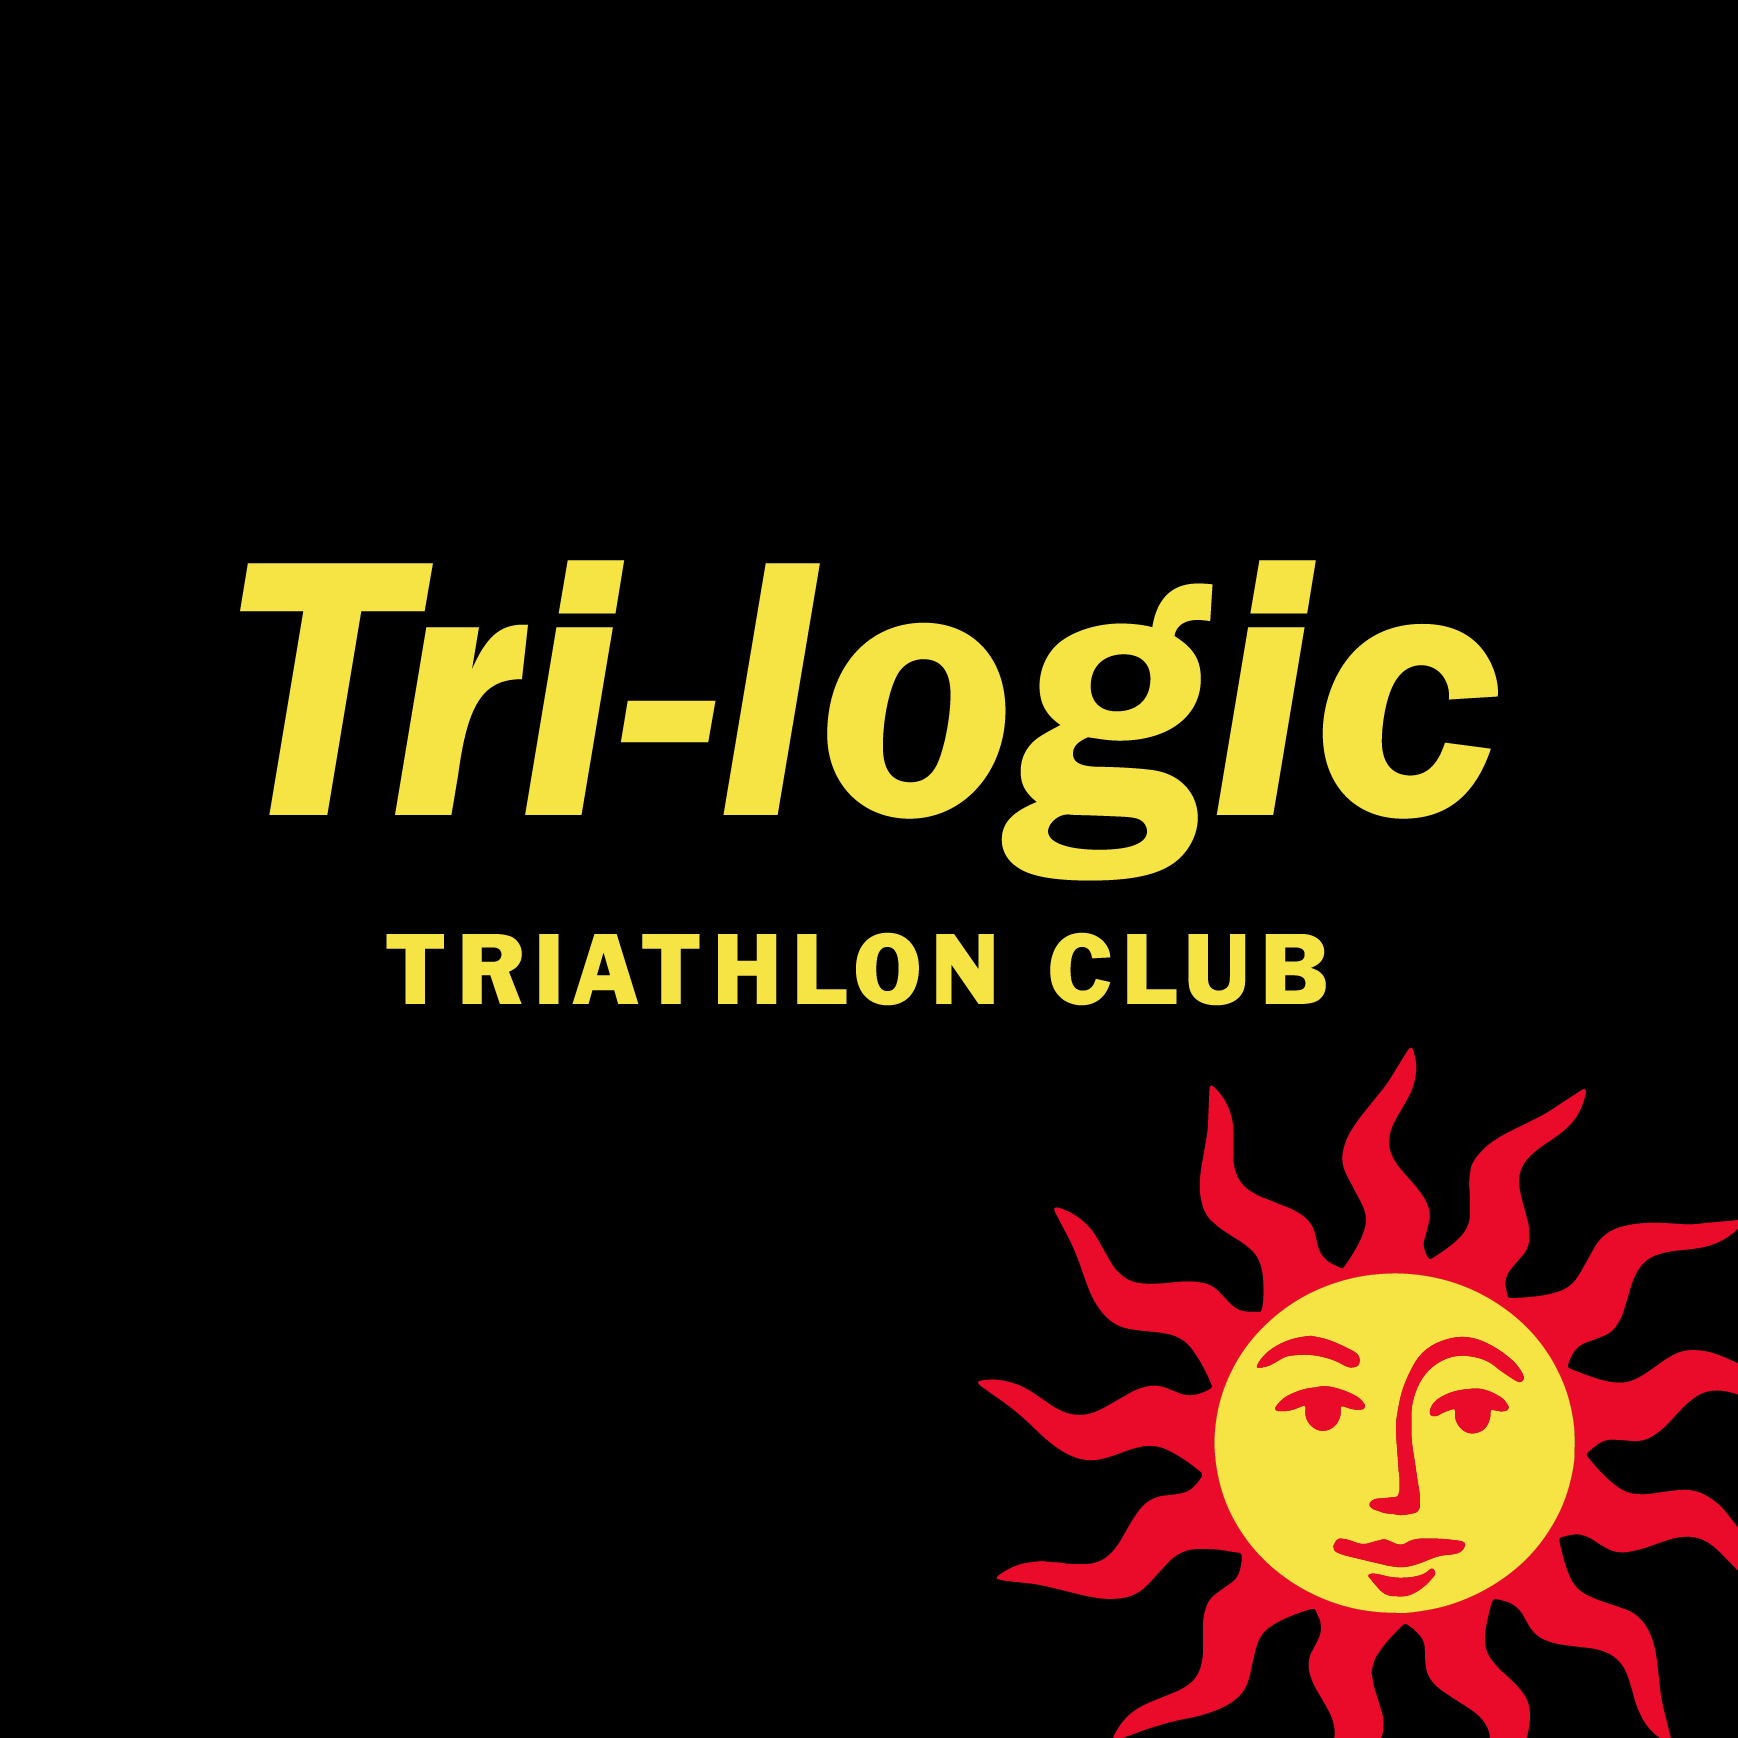 Club Image for TRI-LOGIC